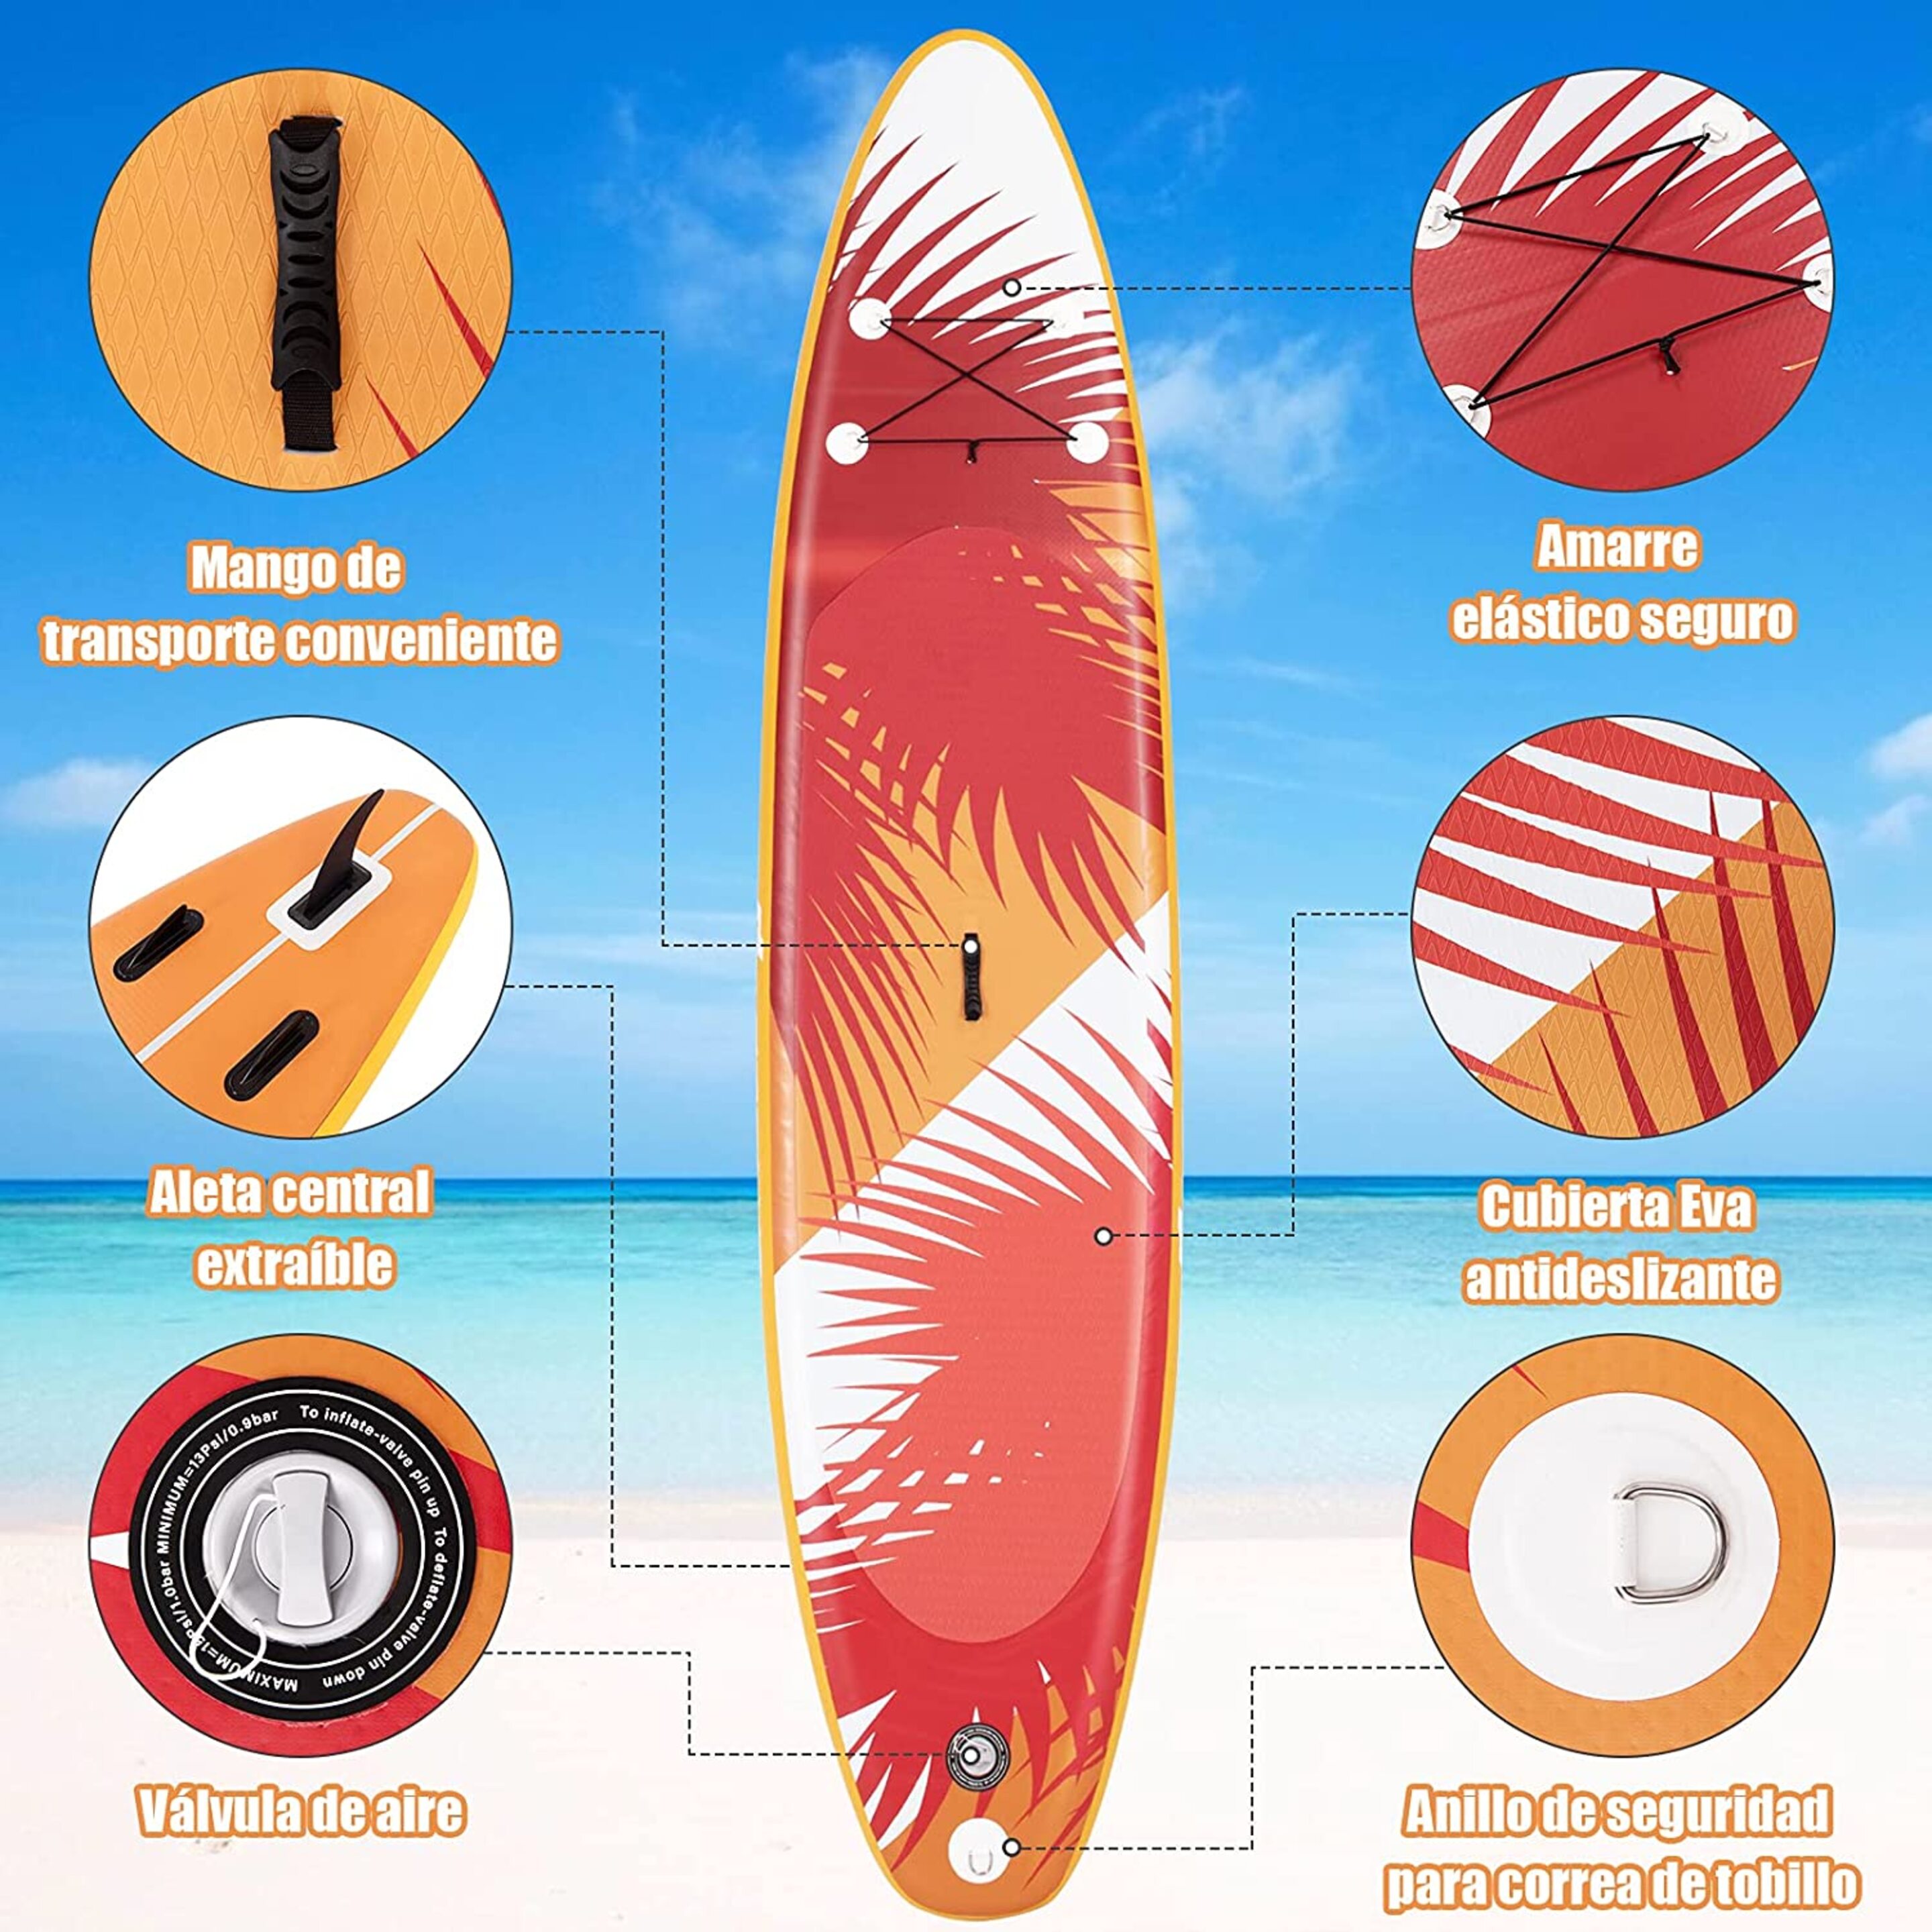 Tabla De Paddle Inflable  320 X 76 X 15 Cm  Sup Board Costway - Naranja  MKP